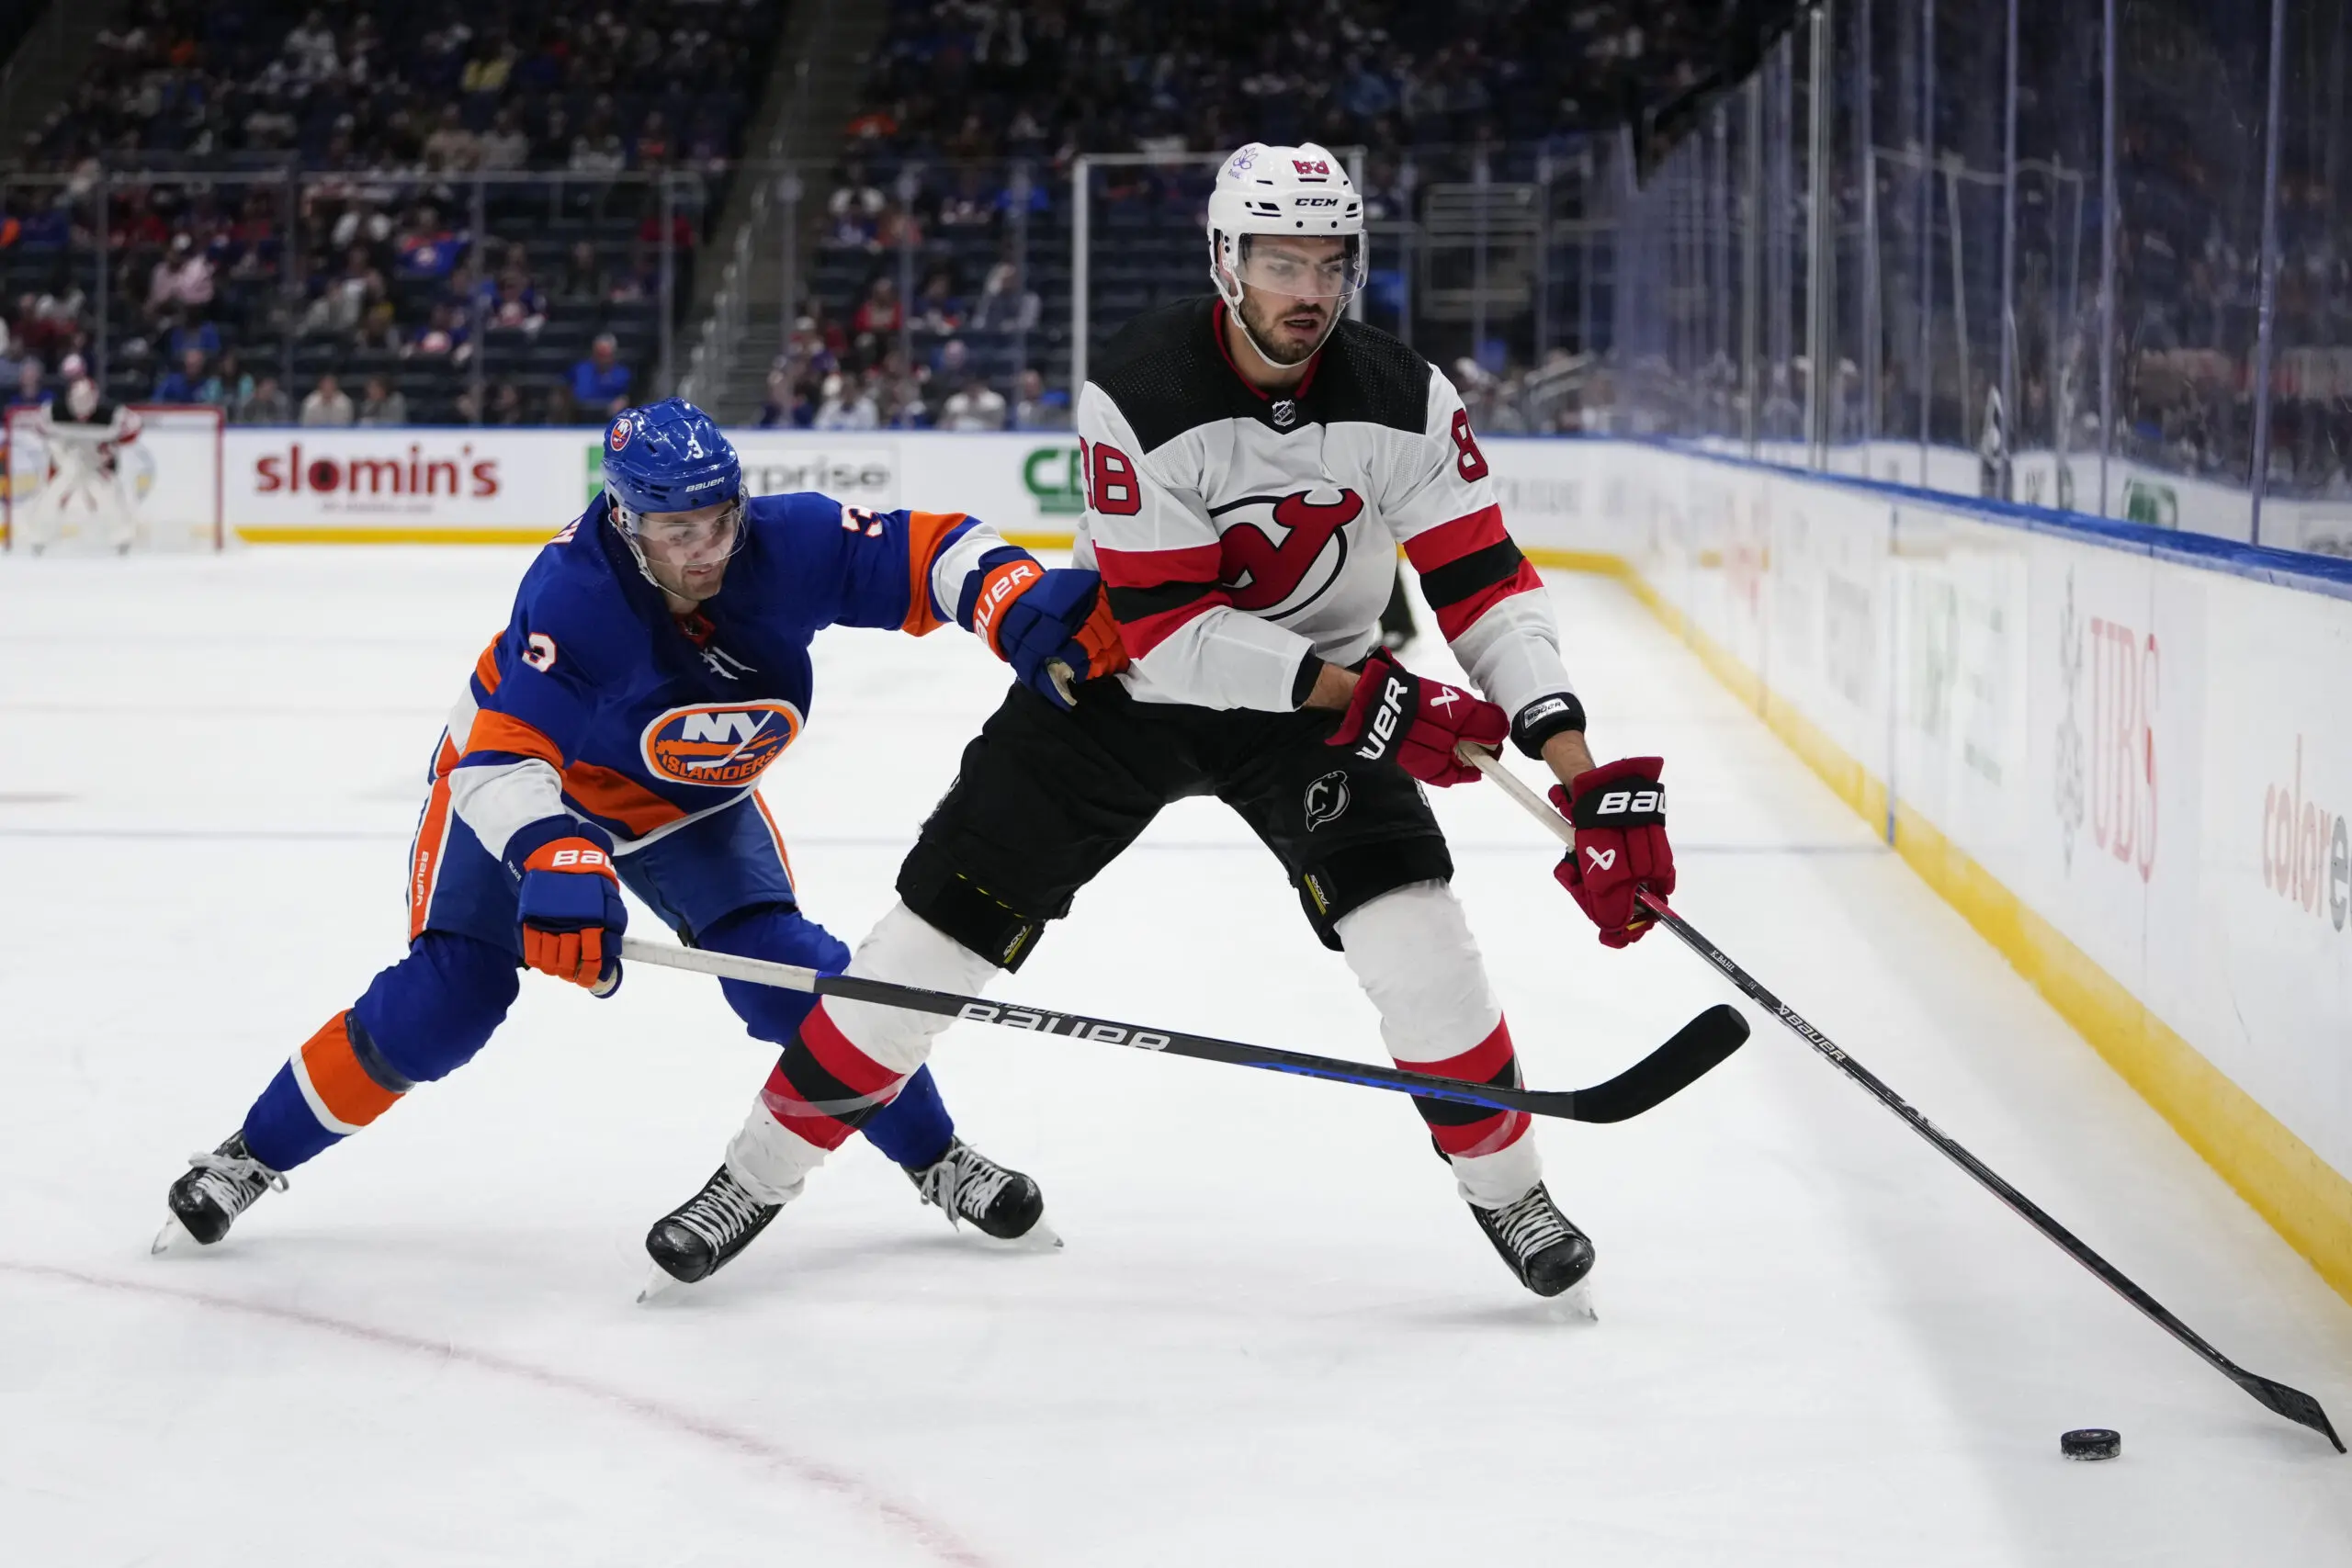 Game Preview: Devils Visit Islanders in First Road Game